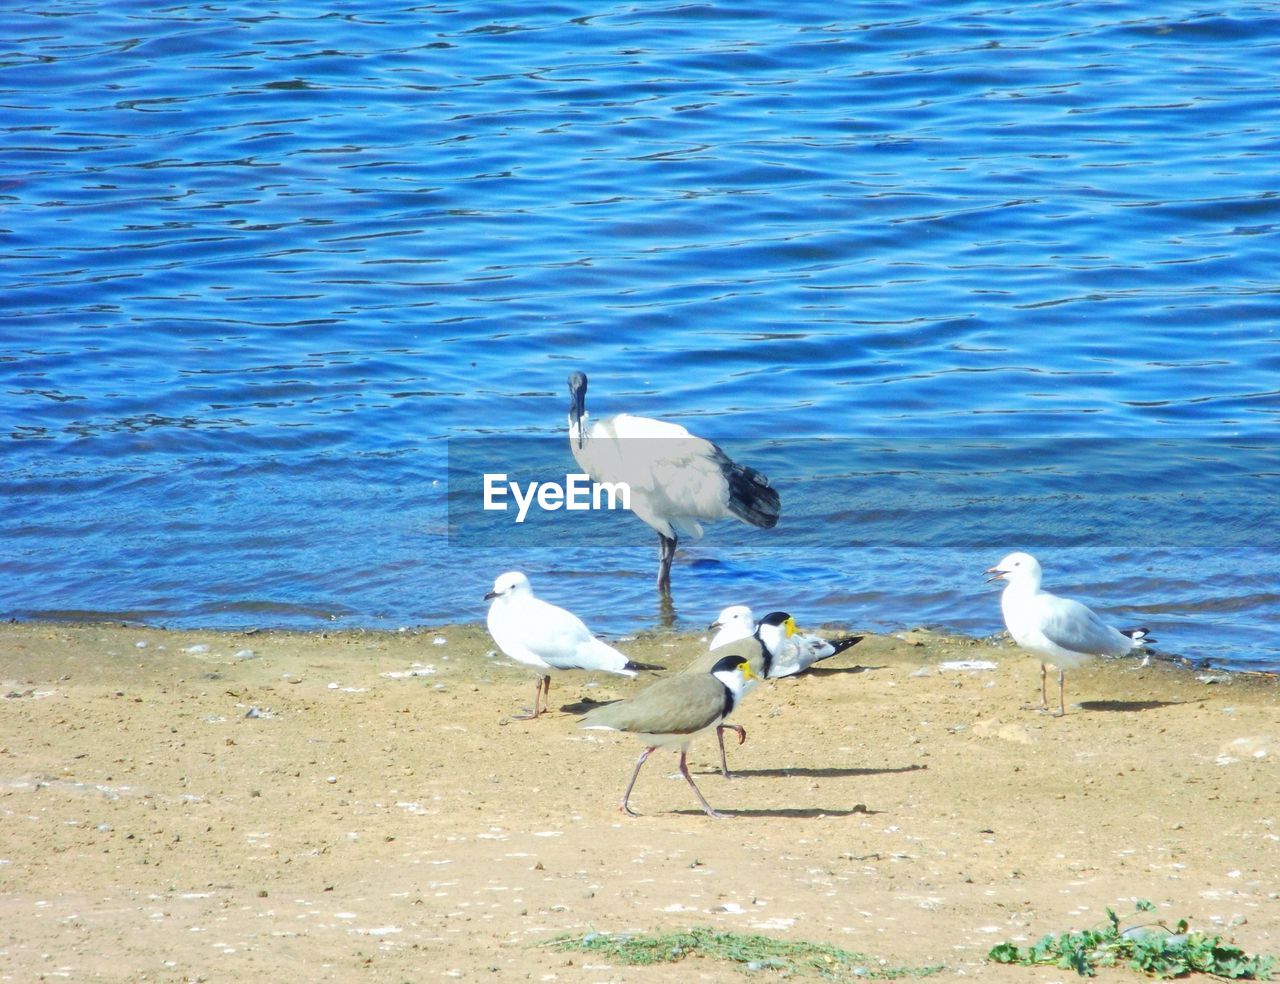 Birds on lakeshore